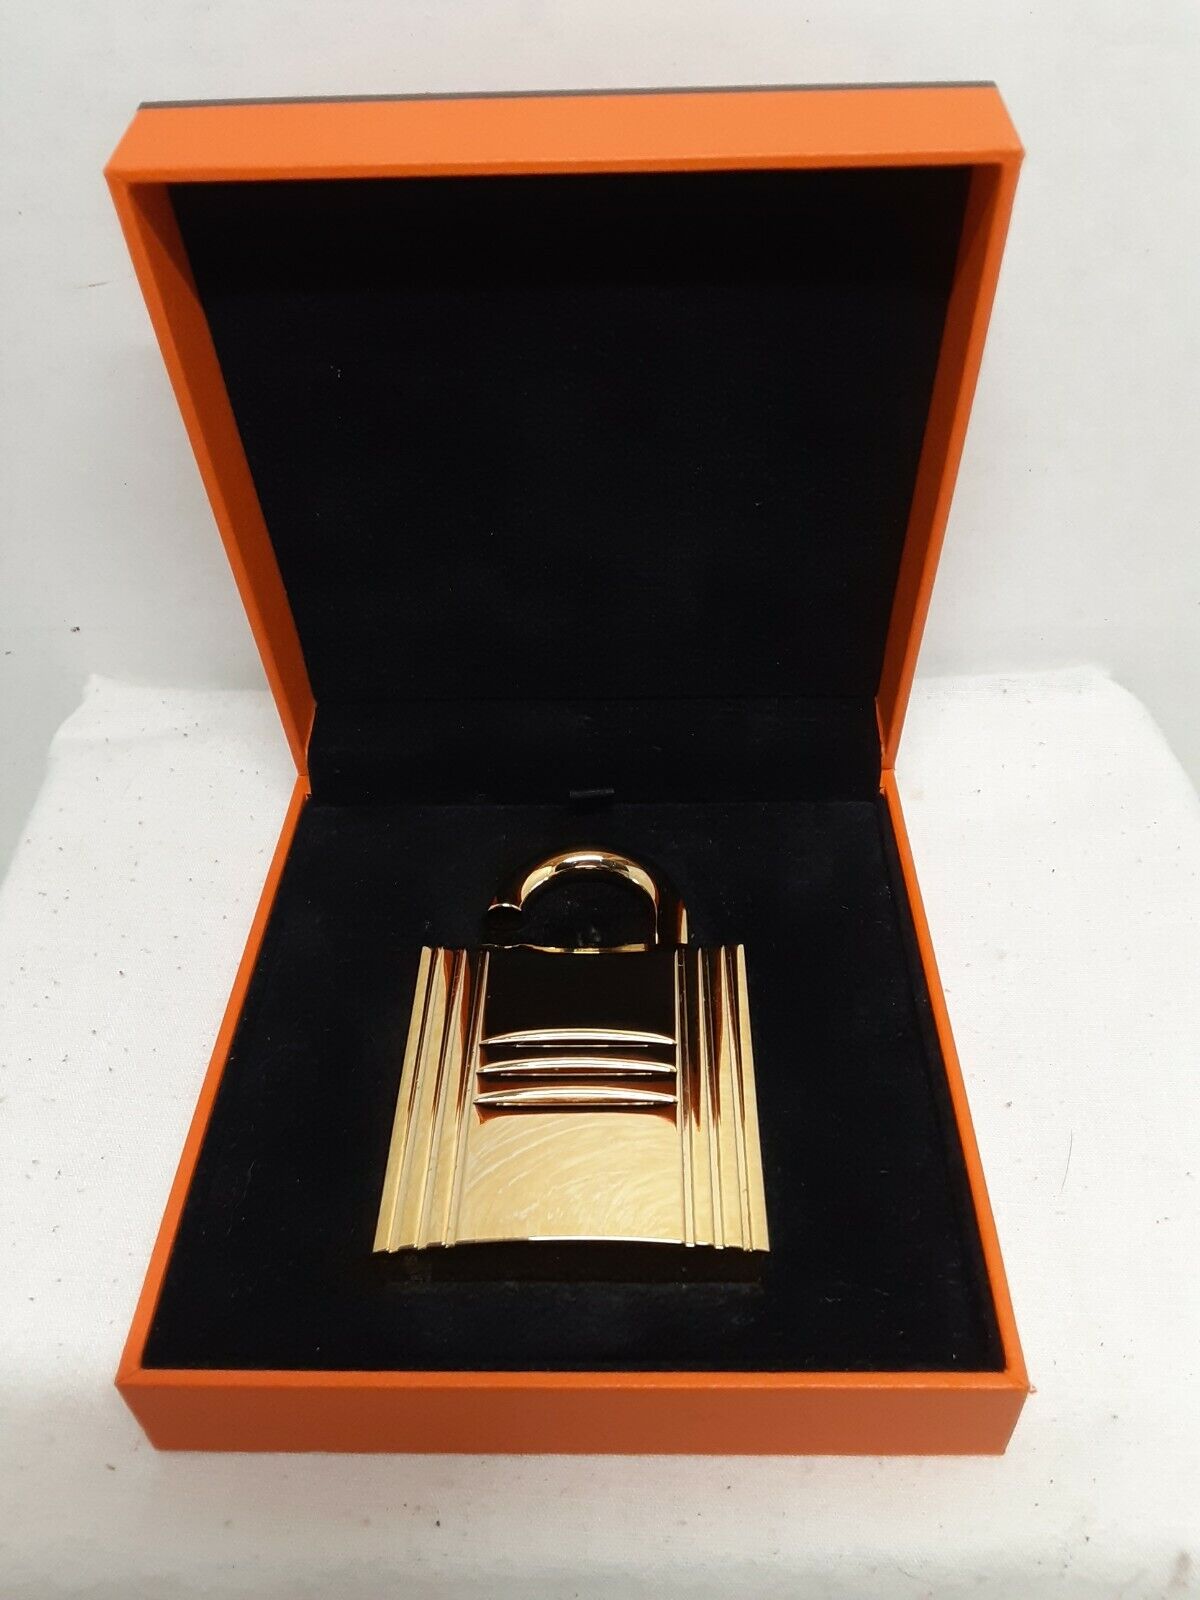 Authentic HERMES Vintage H Logos Cadena Motif Perfume Bottle Case Gold in Box